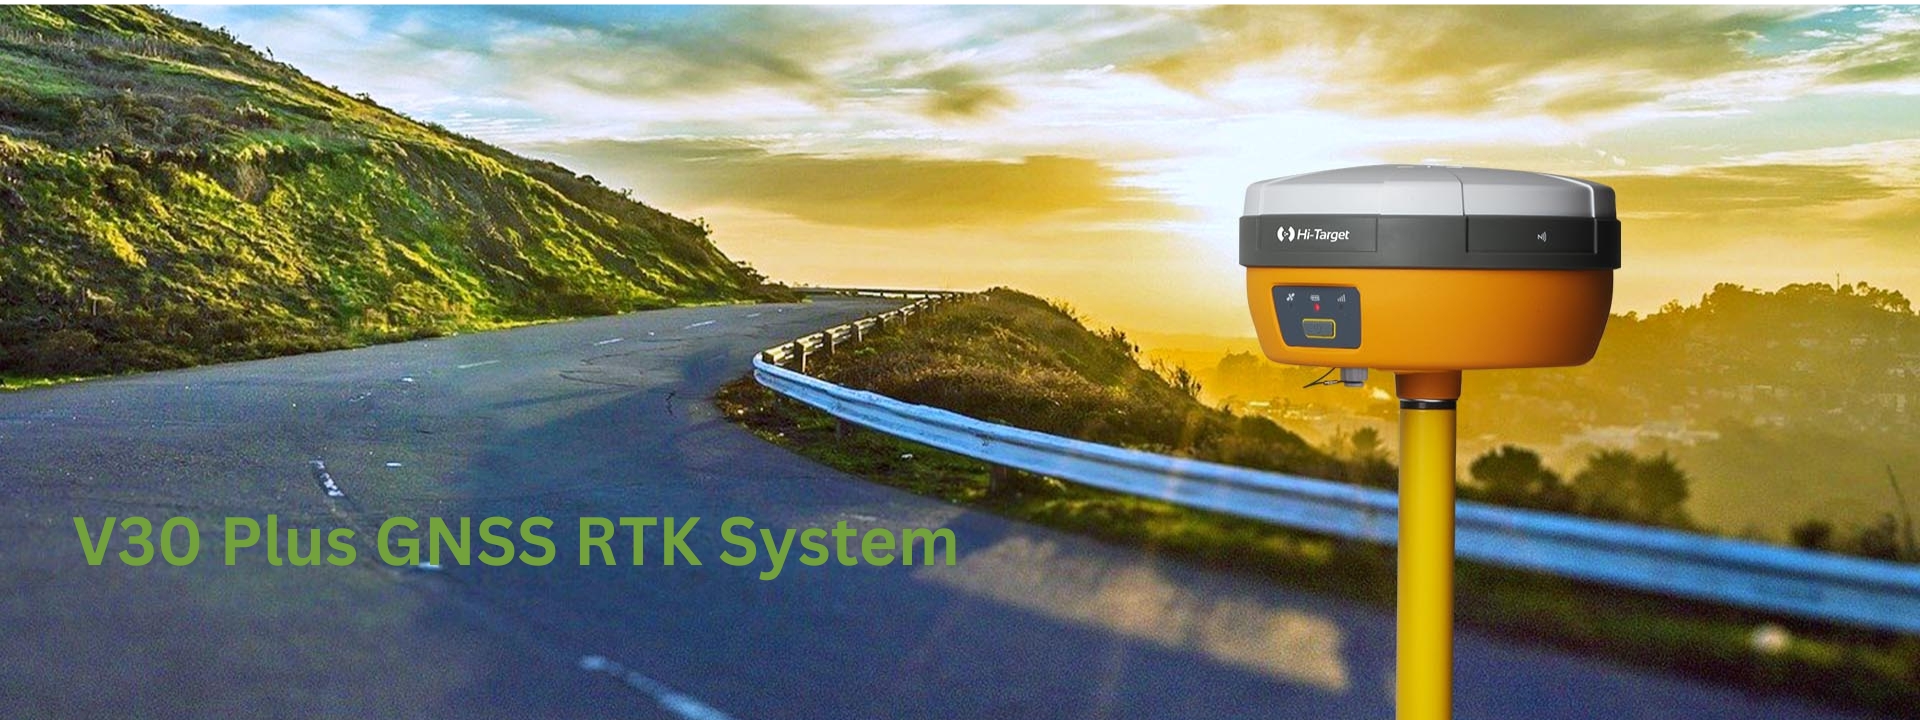 V30 Plus GNSS RTK System